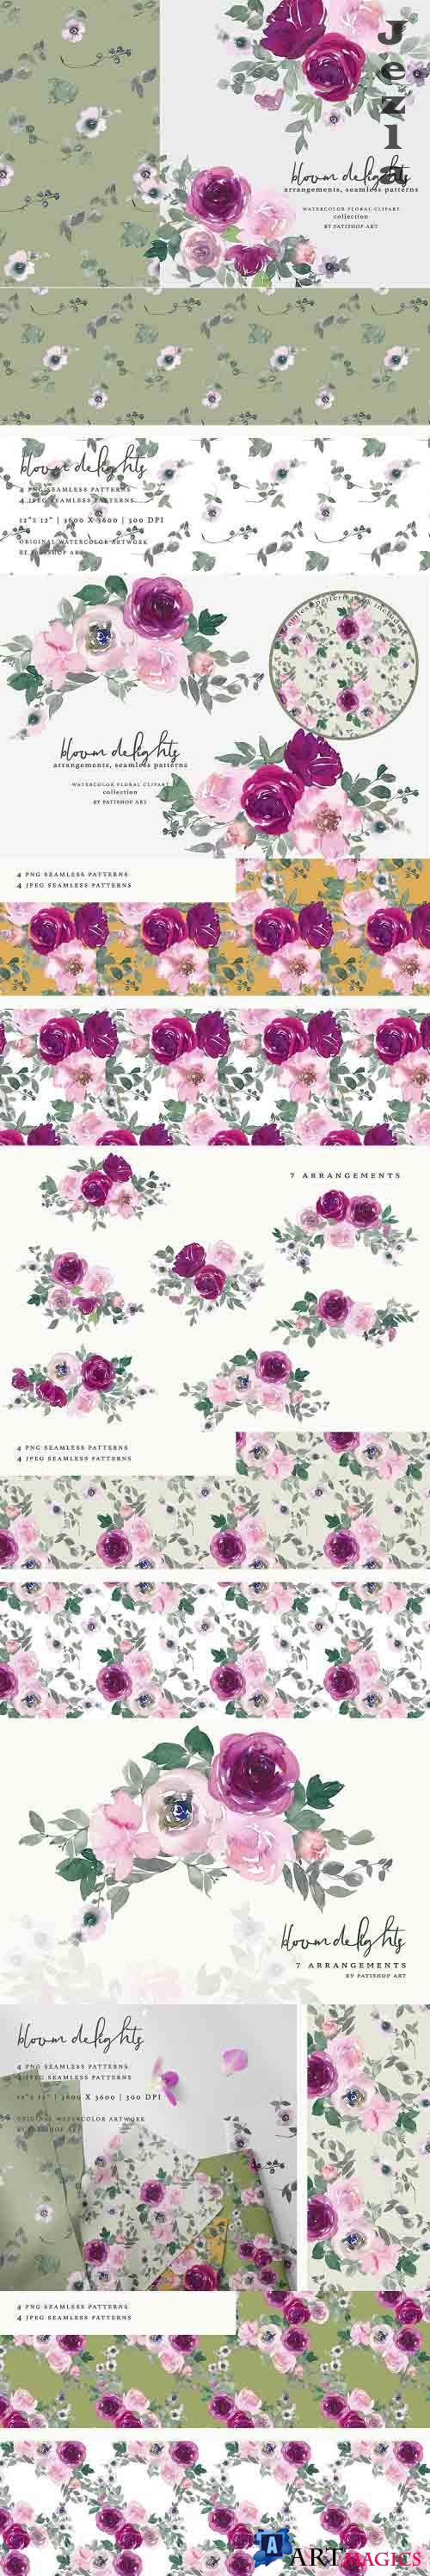 Watercolor Floral Clipart & Patterns - 6186260